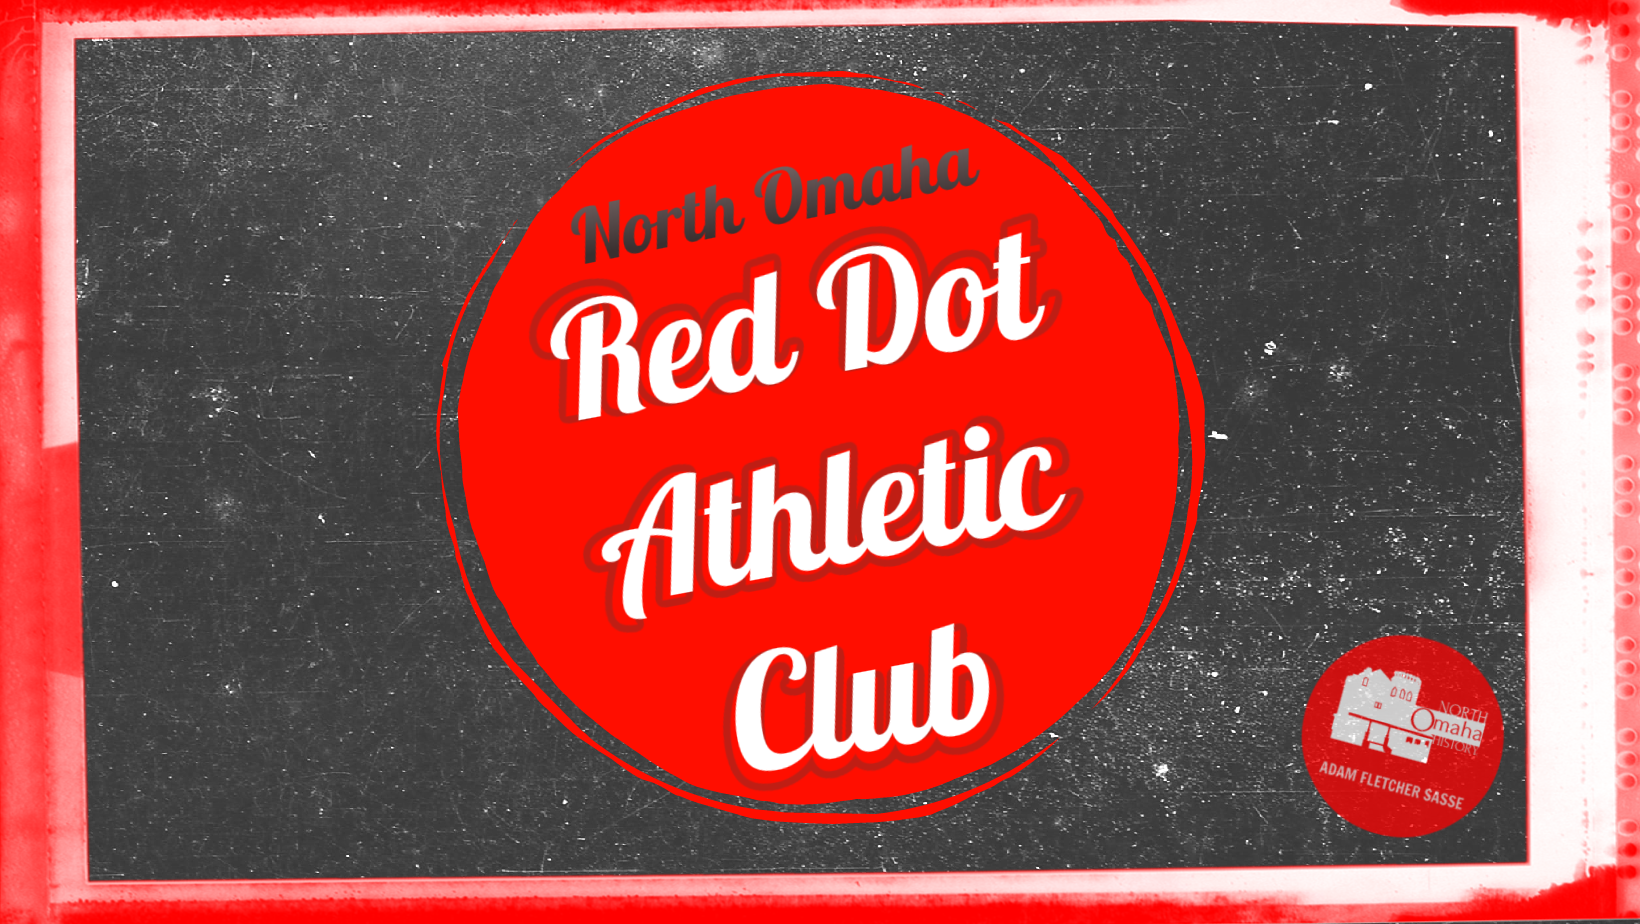 Red Dot Athletic Club, North Omaha, Nebraska